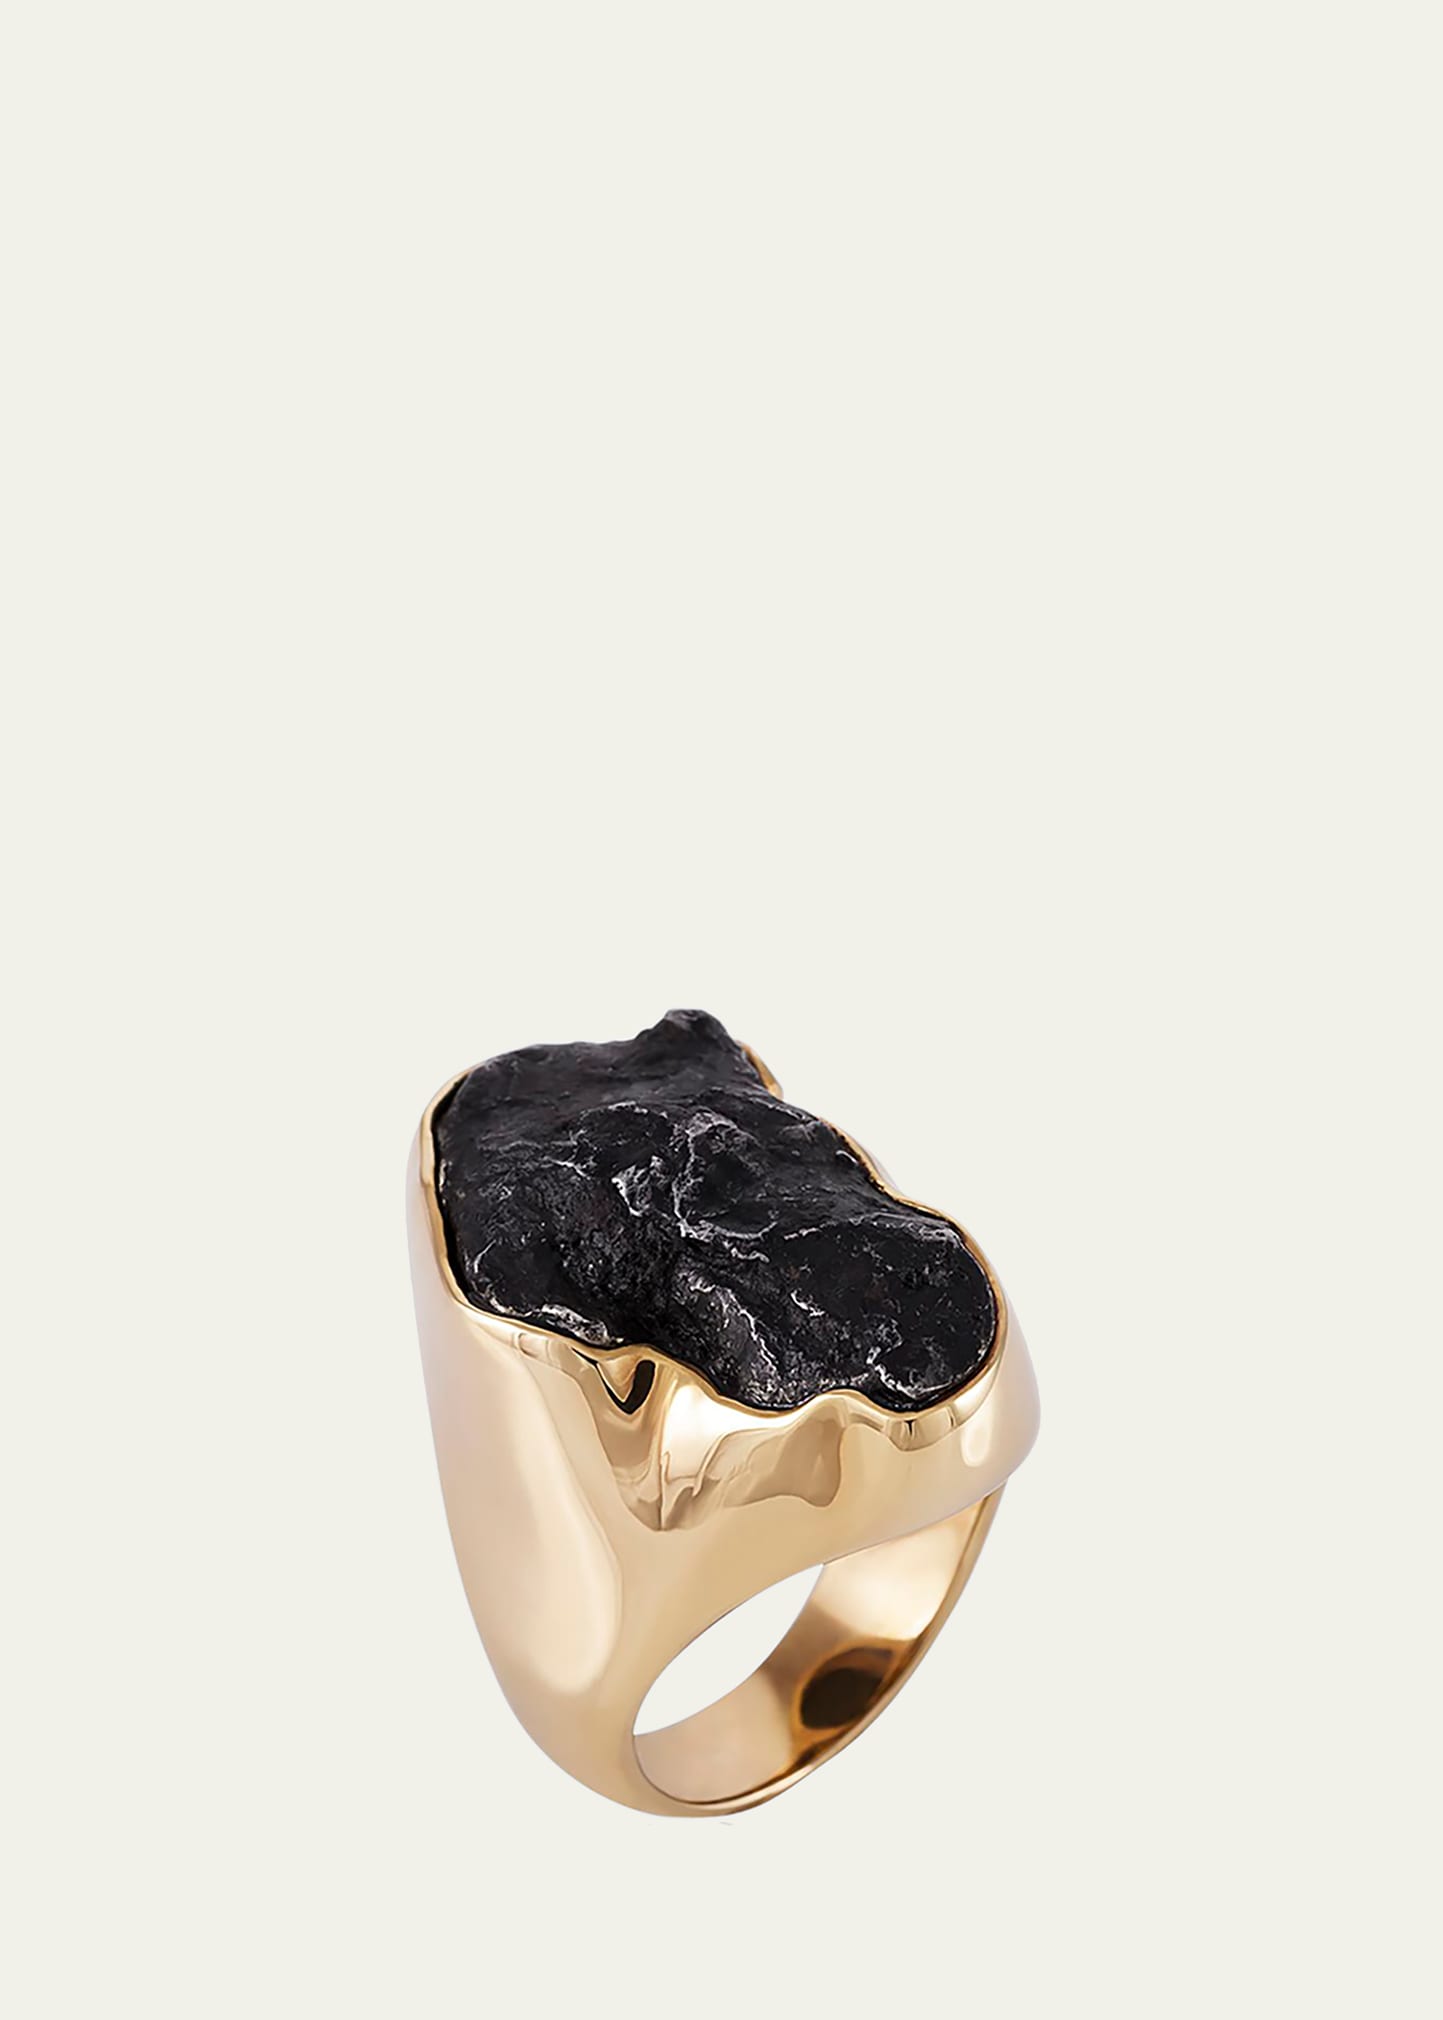 Men's 18K Yellow Gold Sikhote-Alin Meteorite Ring